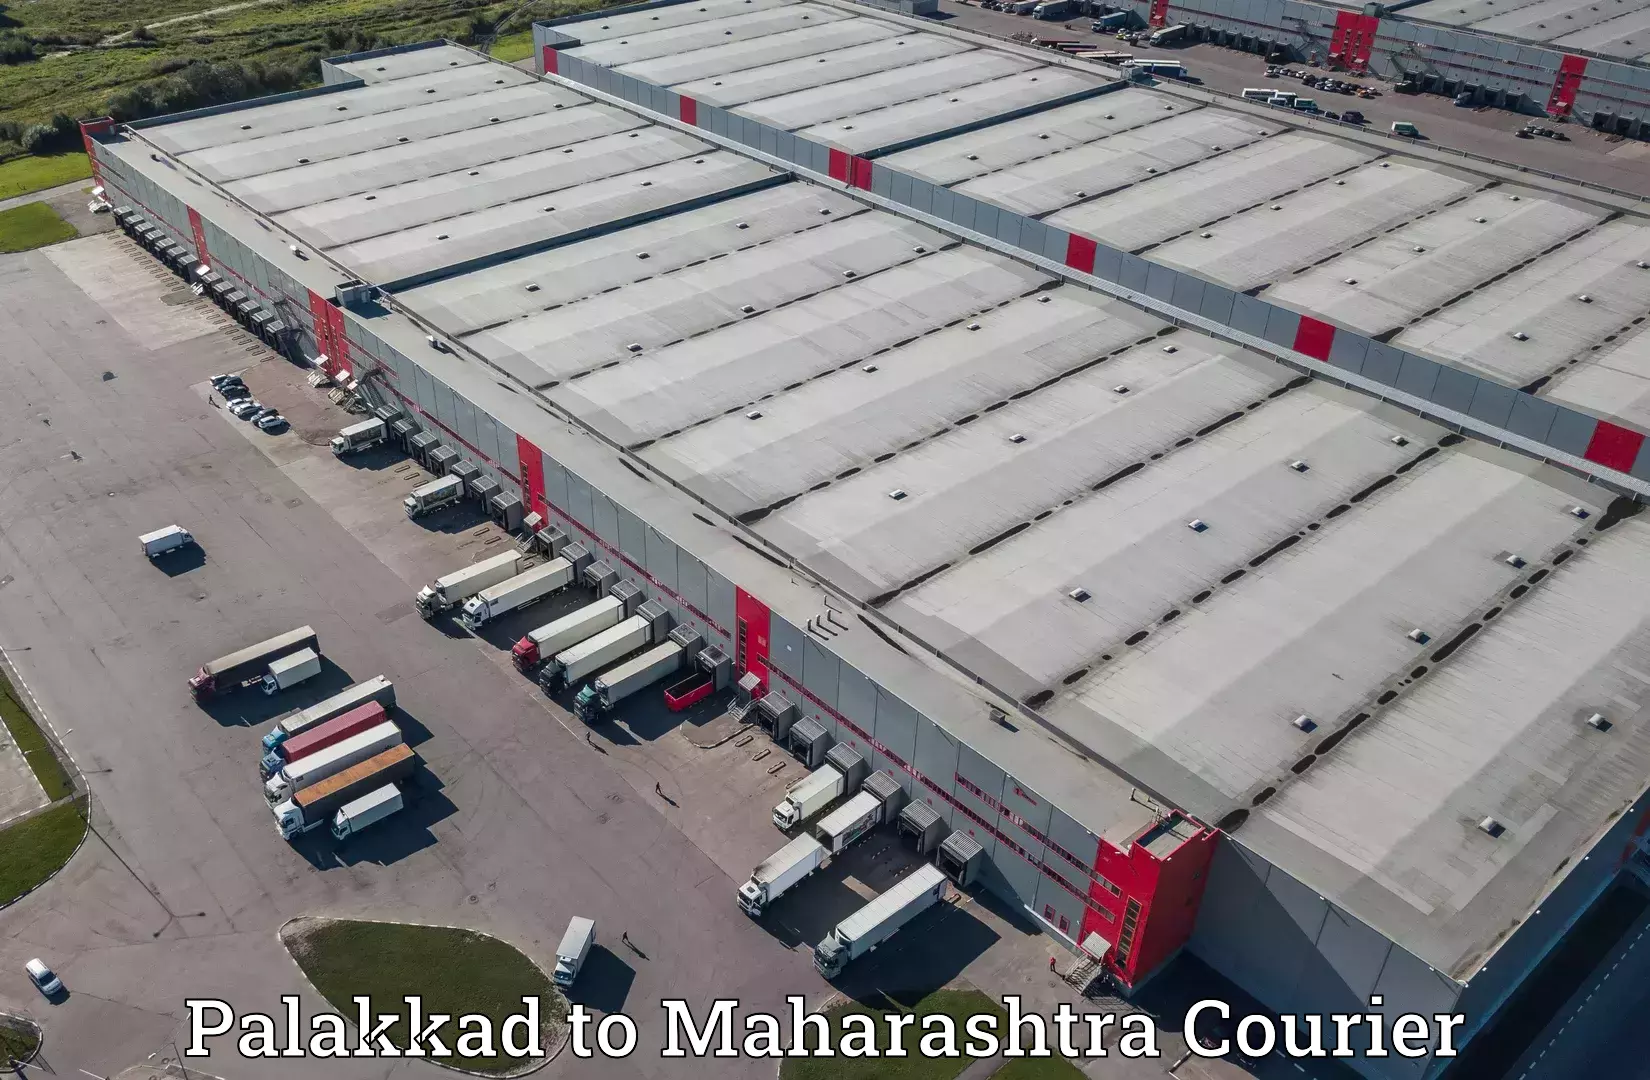 Courier membership in Palakkad to Walchandnagar